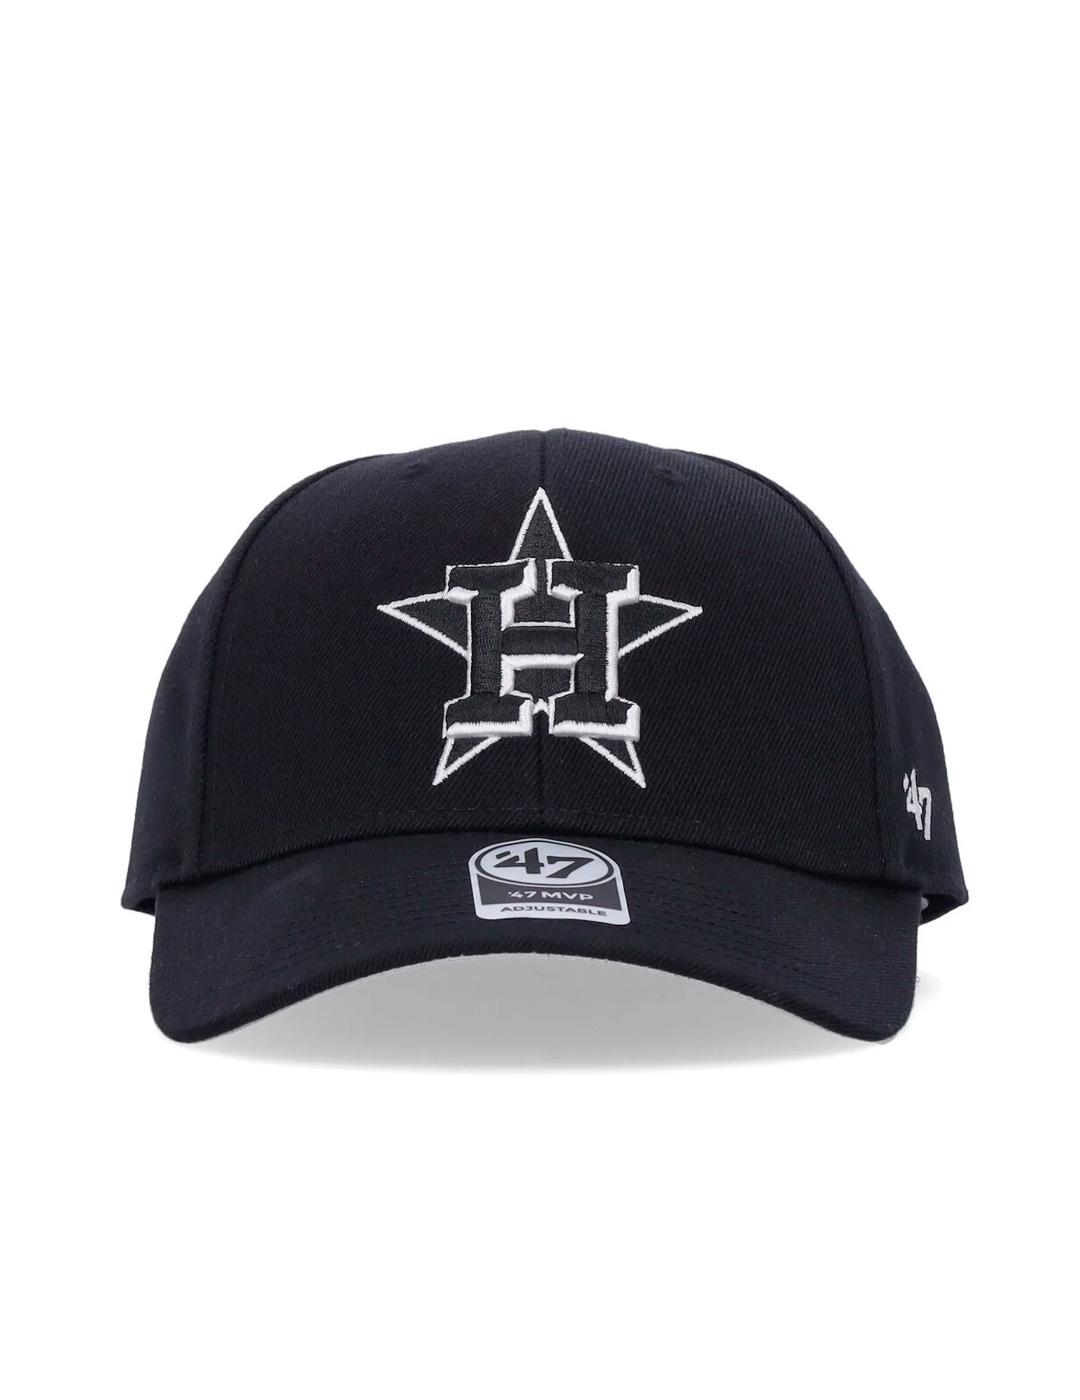 Gorra 47 Brand 'H Astros' Negro